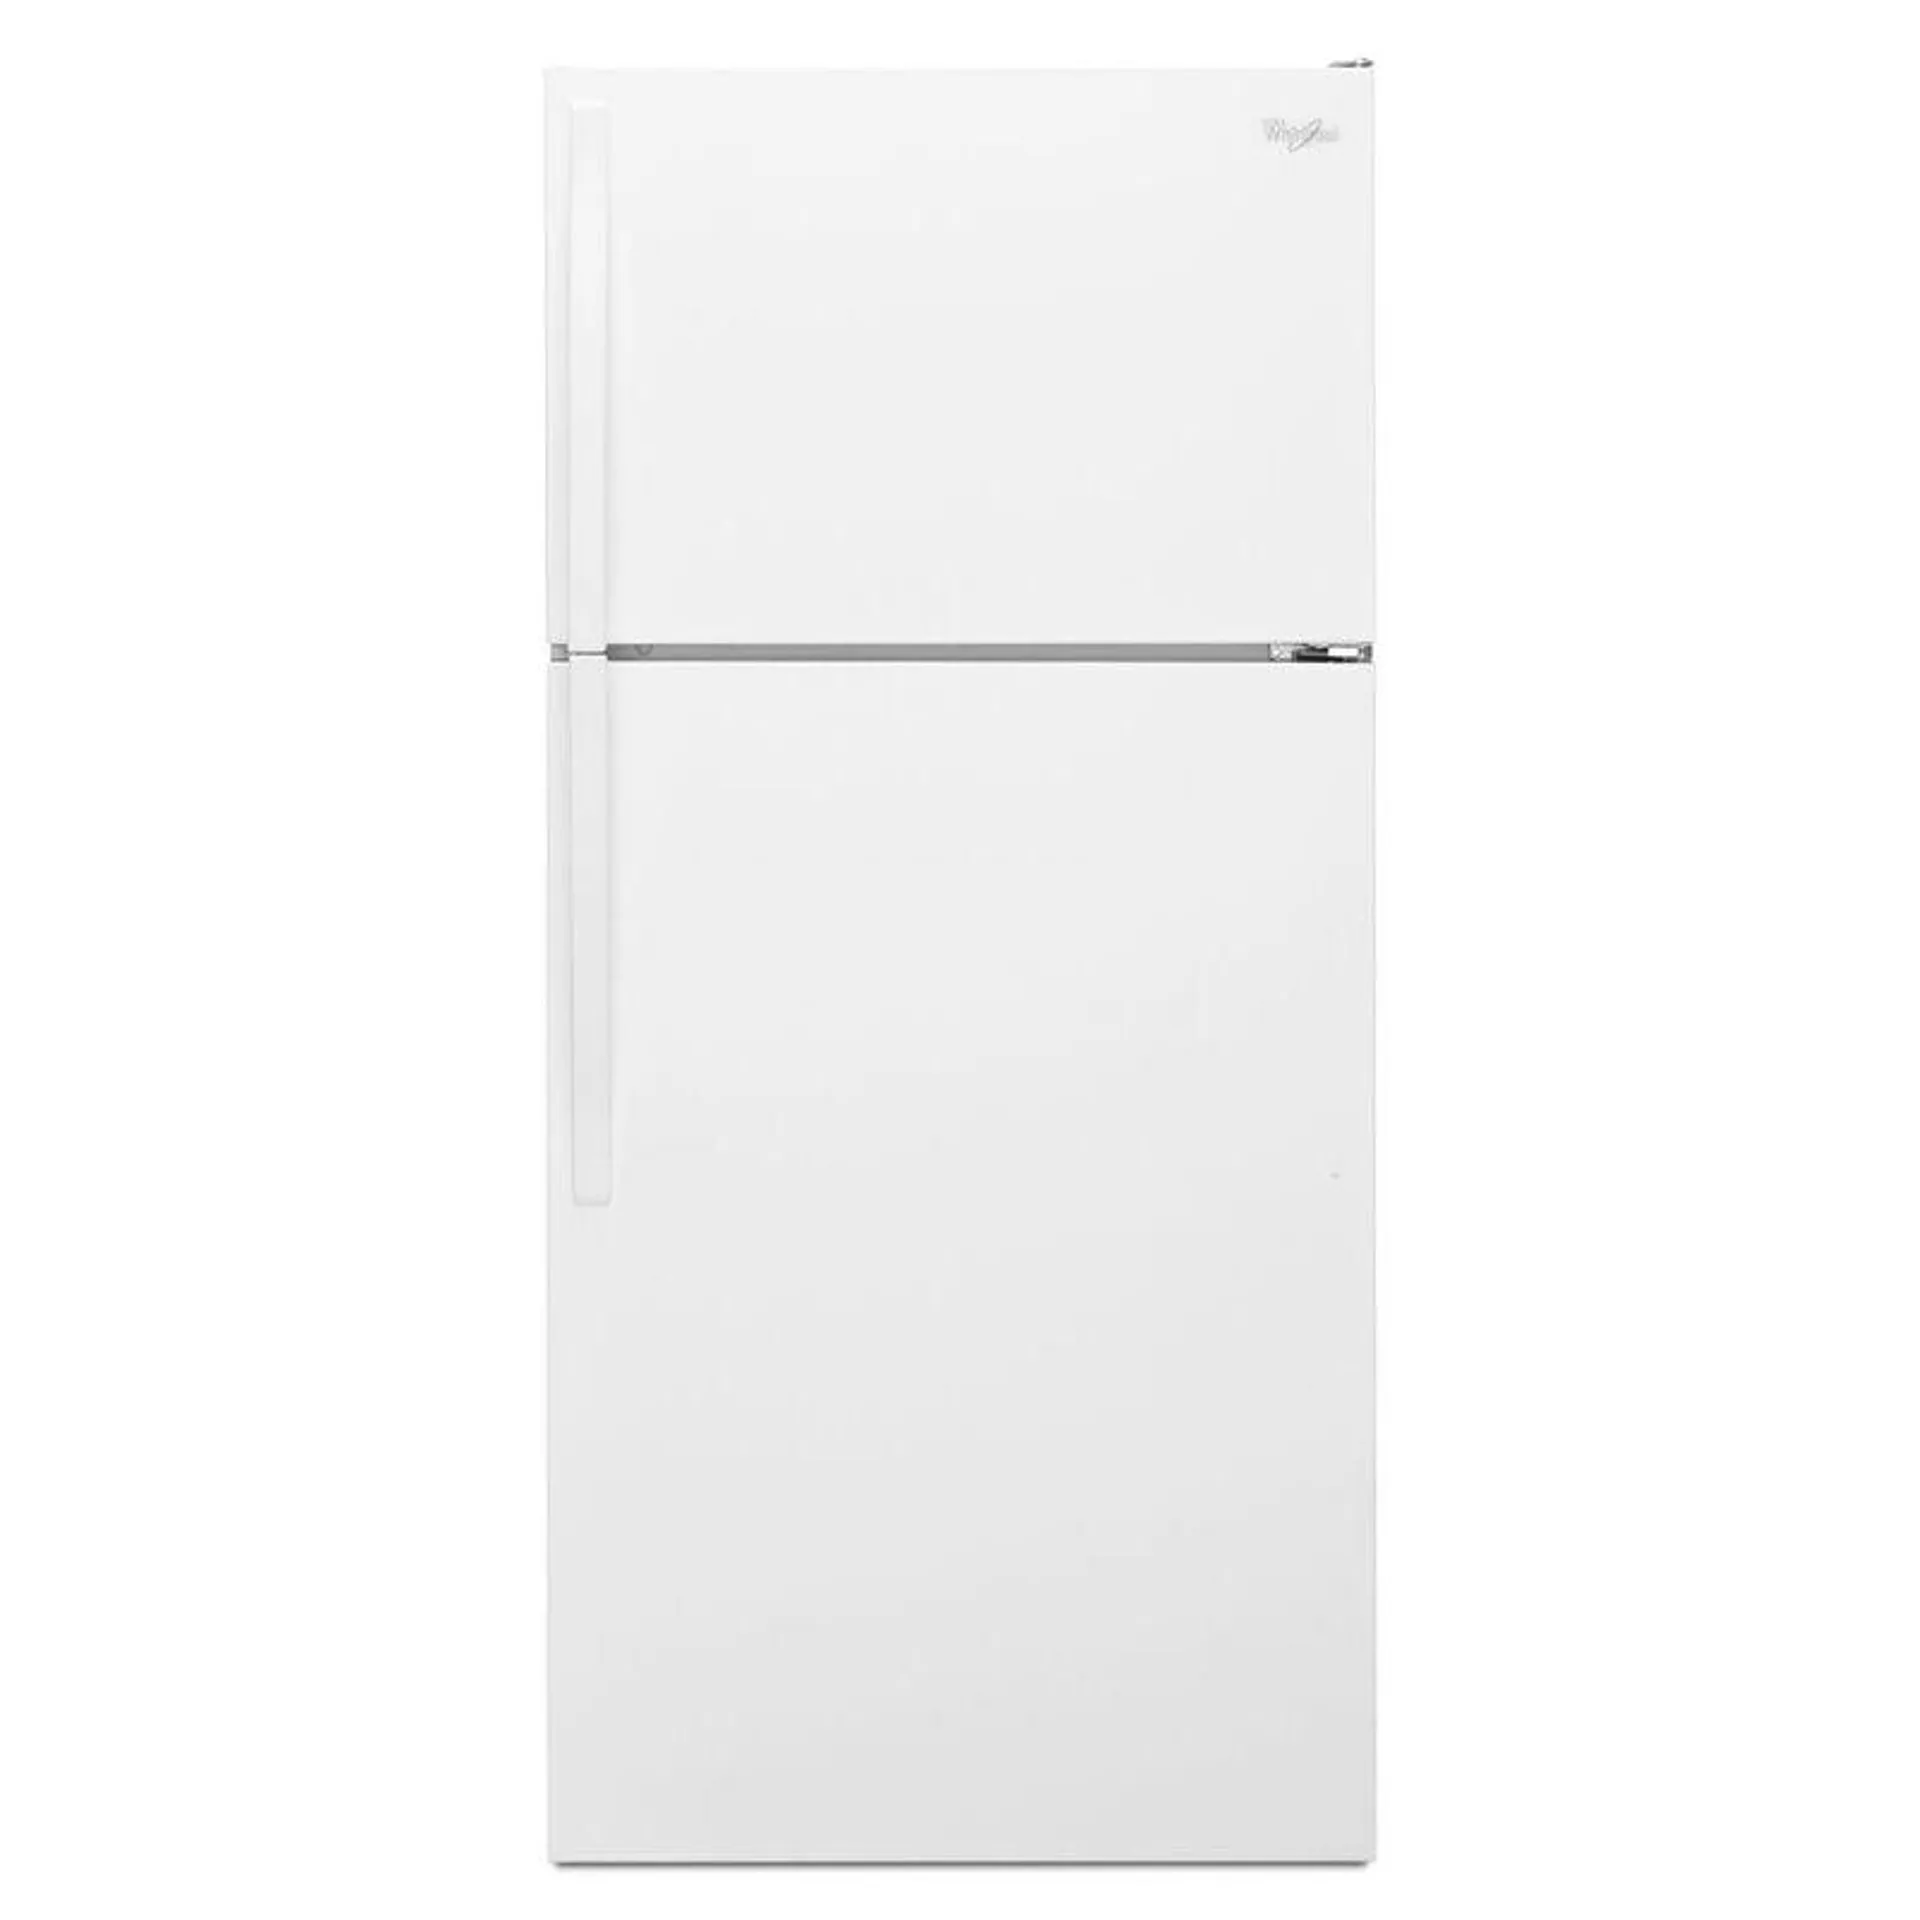 Whirlpool 28 in. 14.4 cu. ft. Top Freezer Refrigerator - White